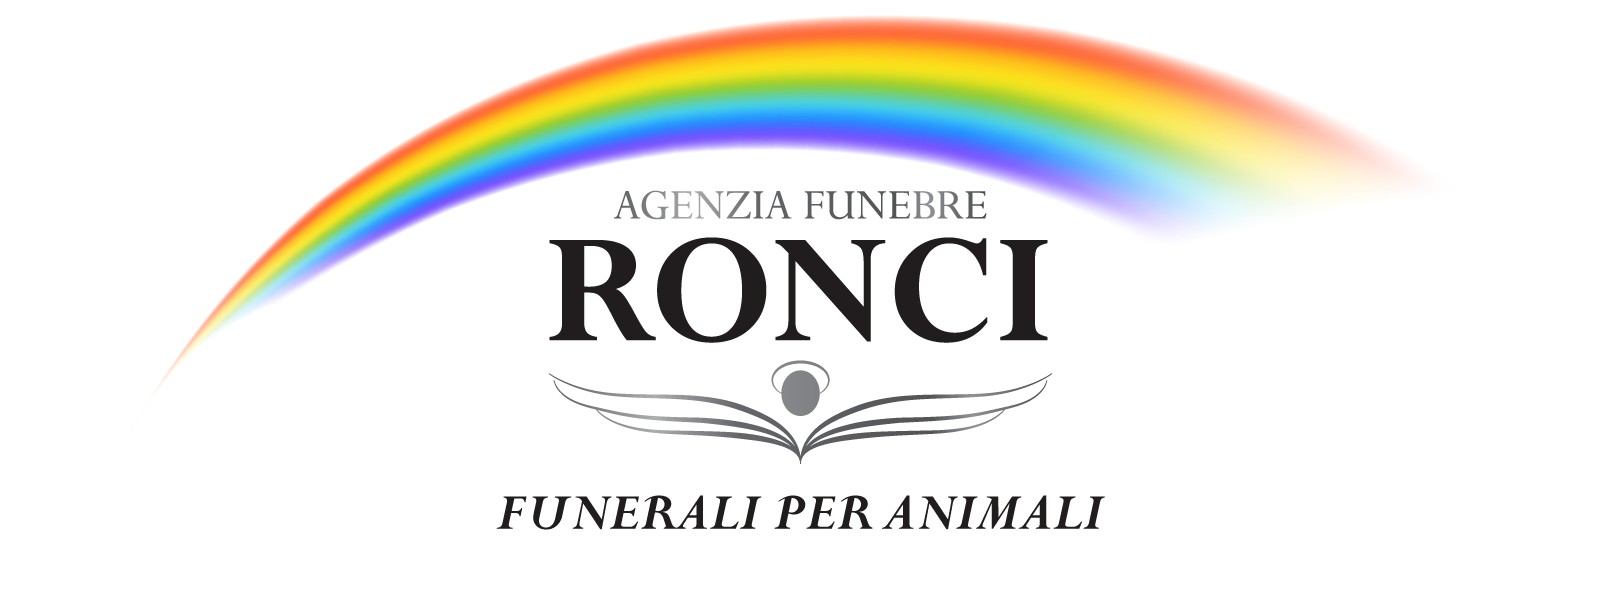 https://www.agenziafunebreronci.it/immagini_pagine/255/funerali-per-animali-255-600.jpg